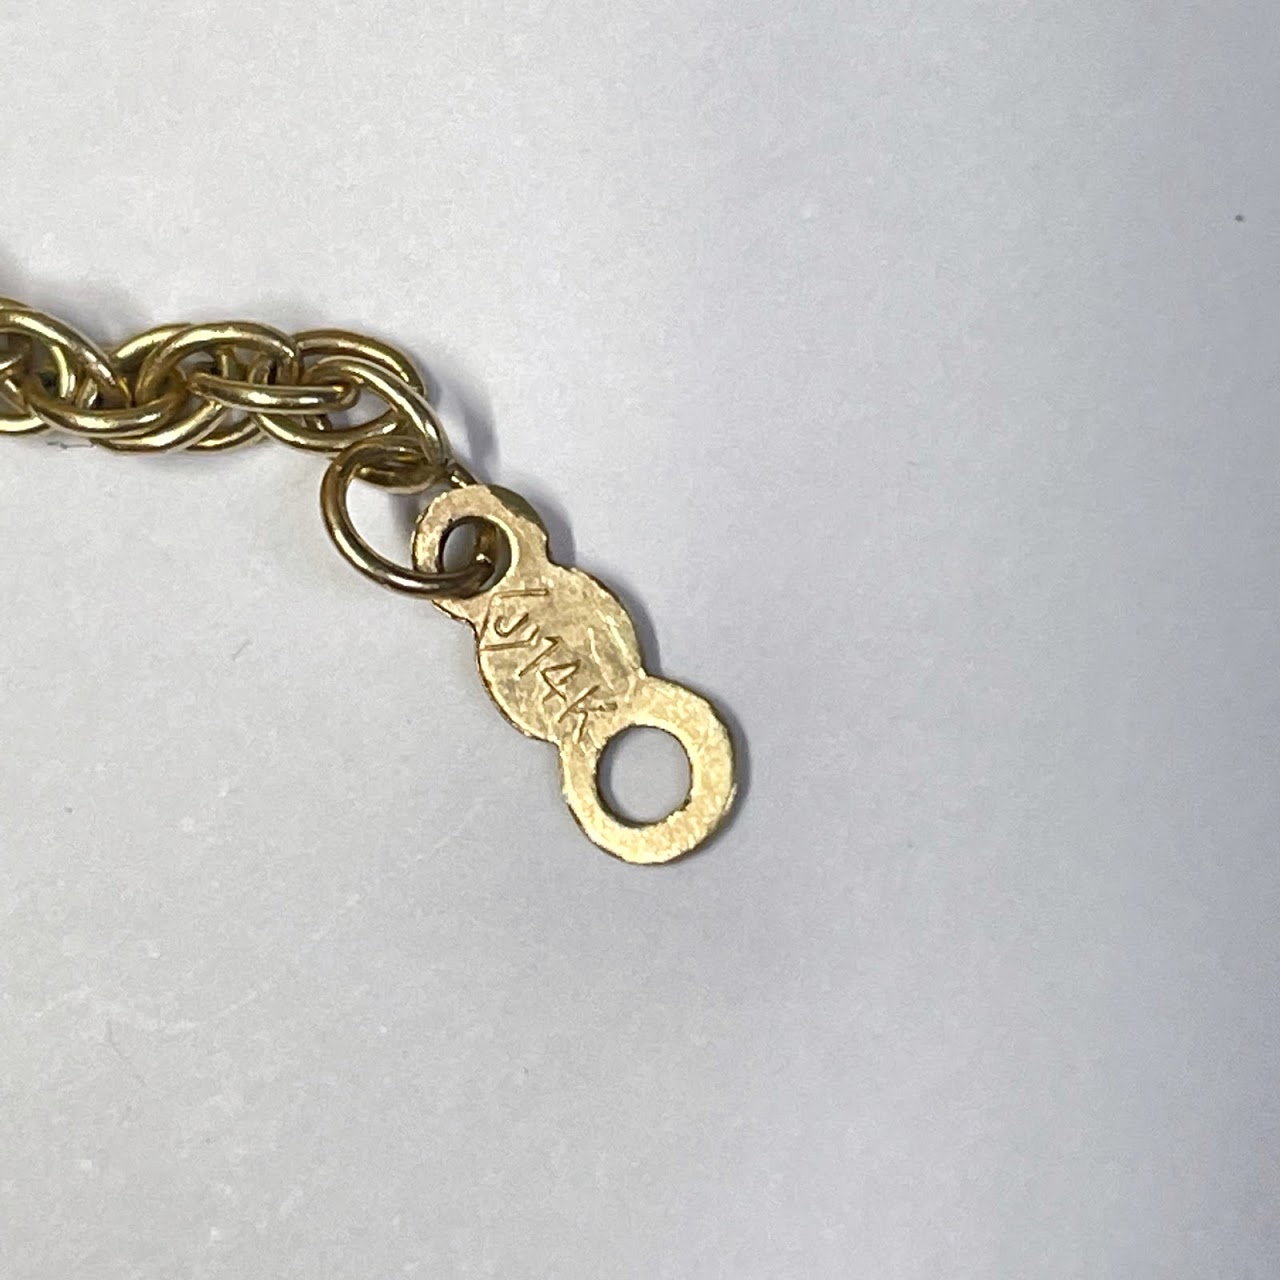 14K Gold Engraved Clock Pendant Necklace